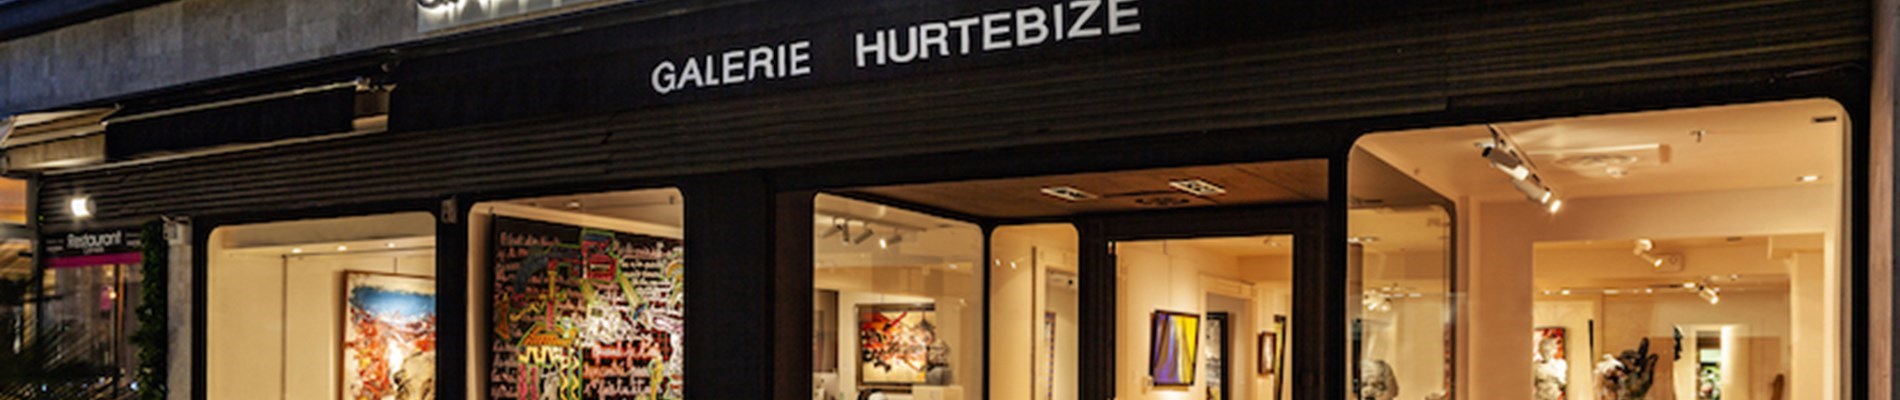 Galerie Hurtebize